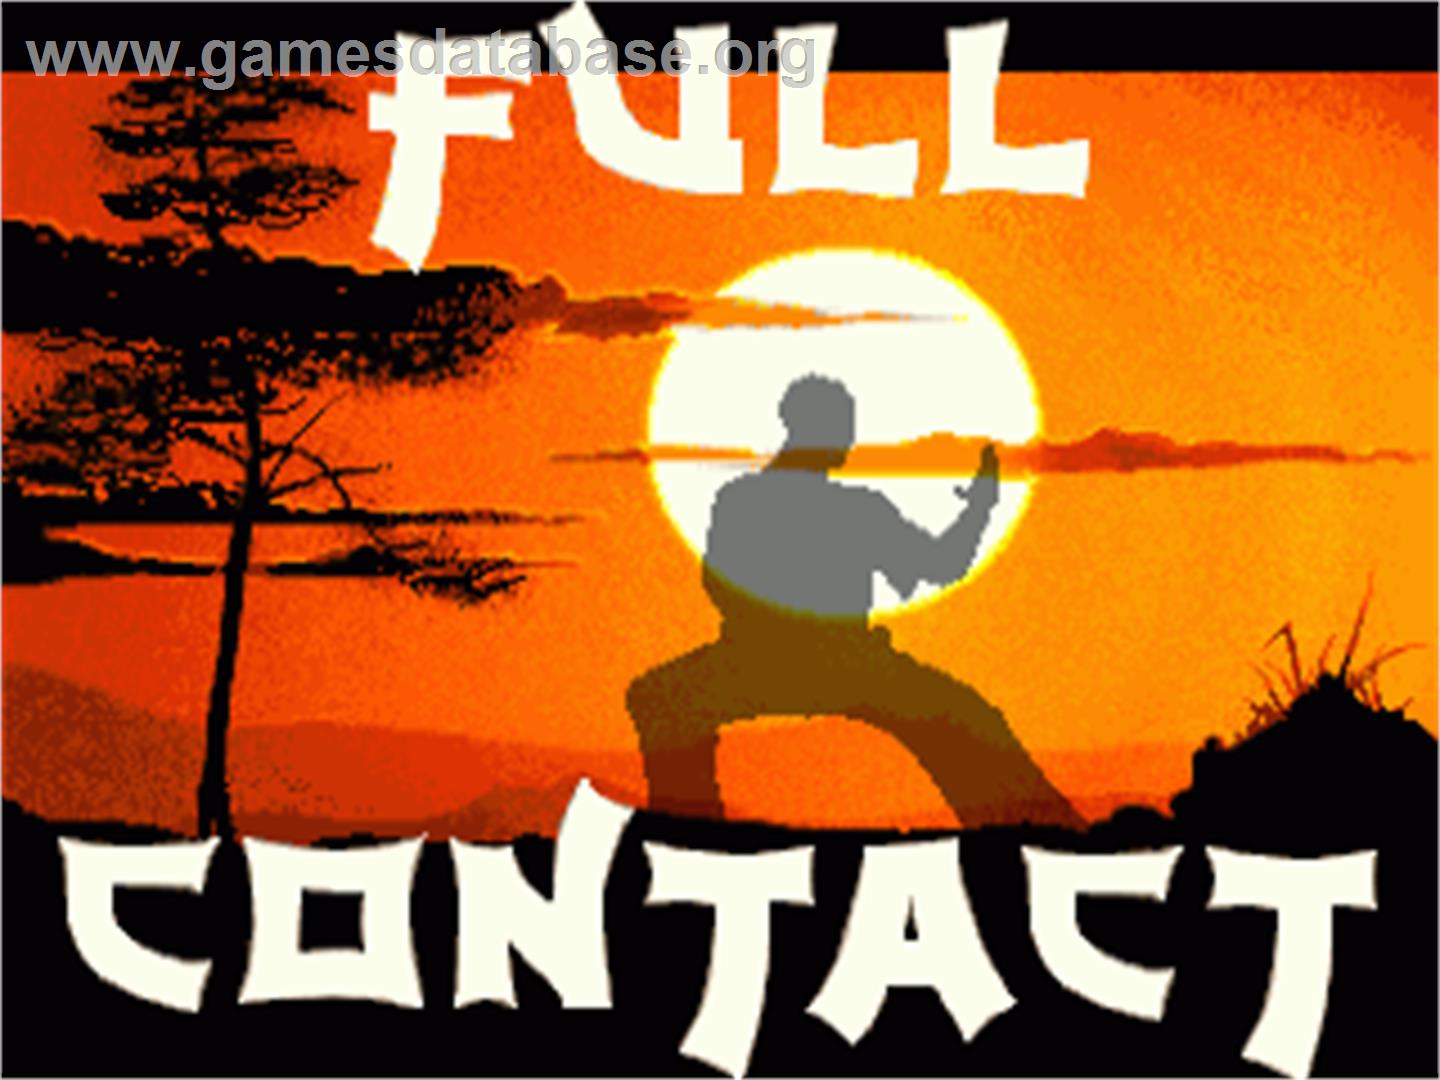 Full Contact - Commodore Amiga - Artwork - Title Screen